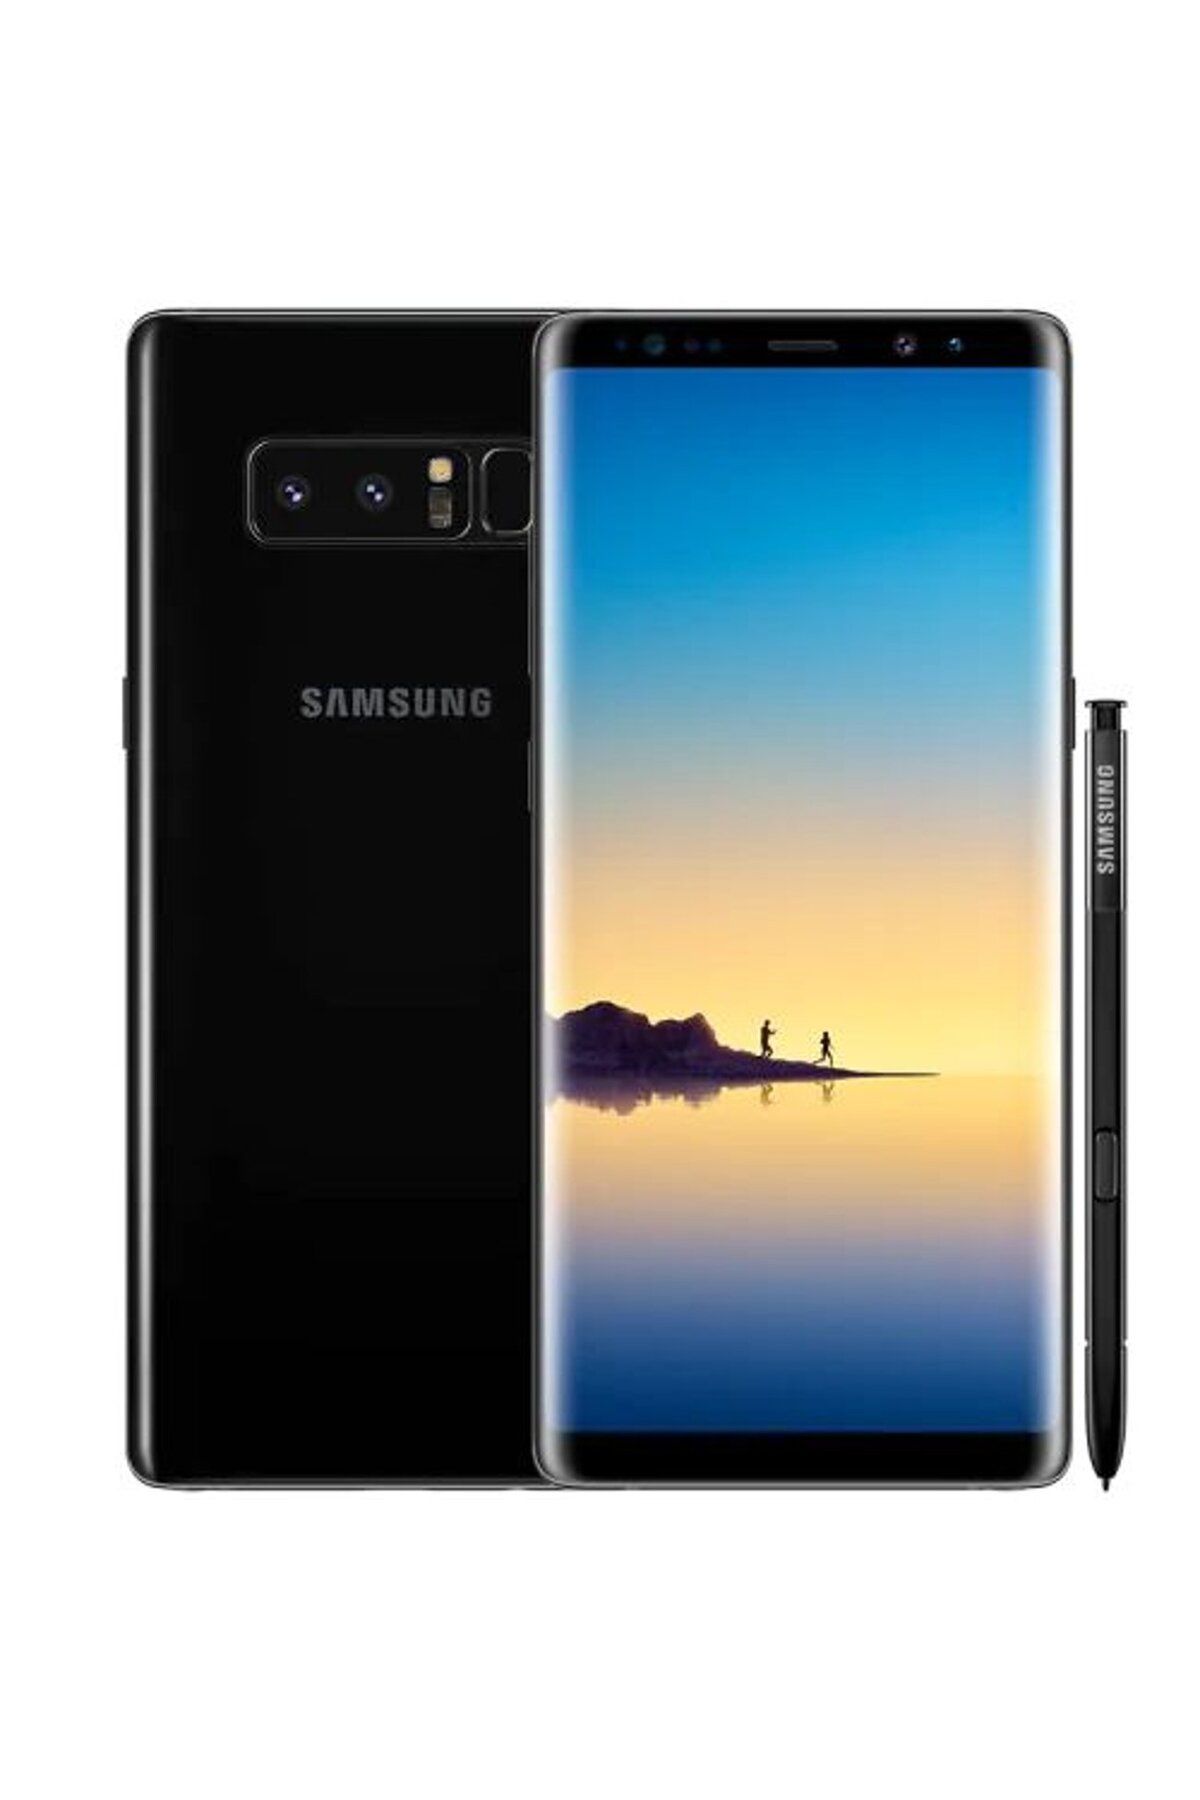 Samsung Yenilenmiş Samsung Galaxy Note 8 64GB Siyah A Kalite